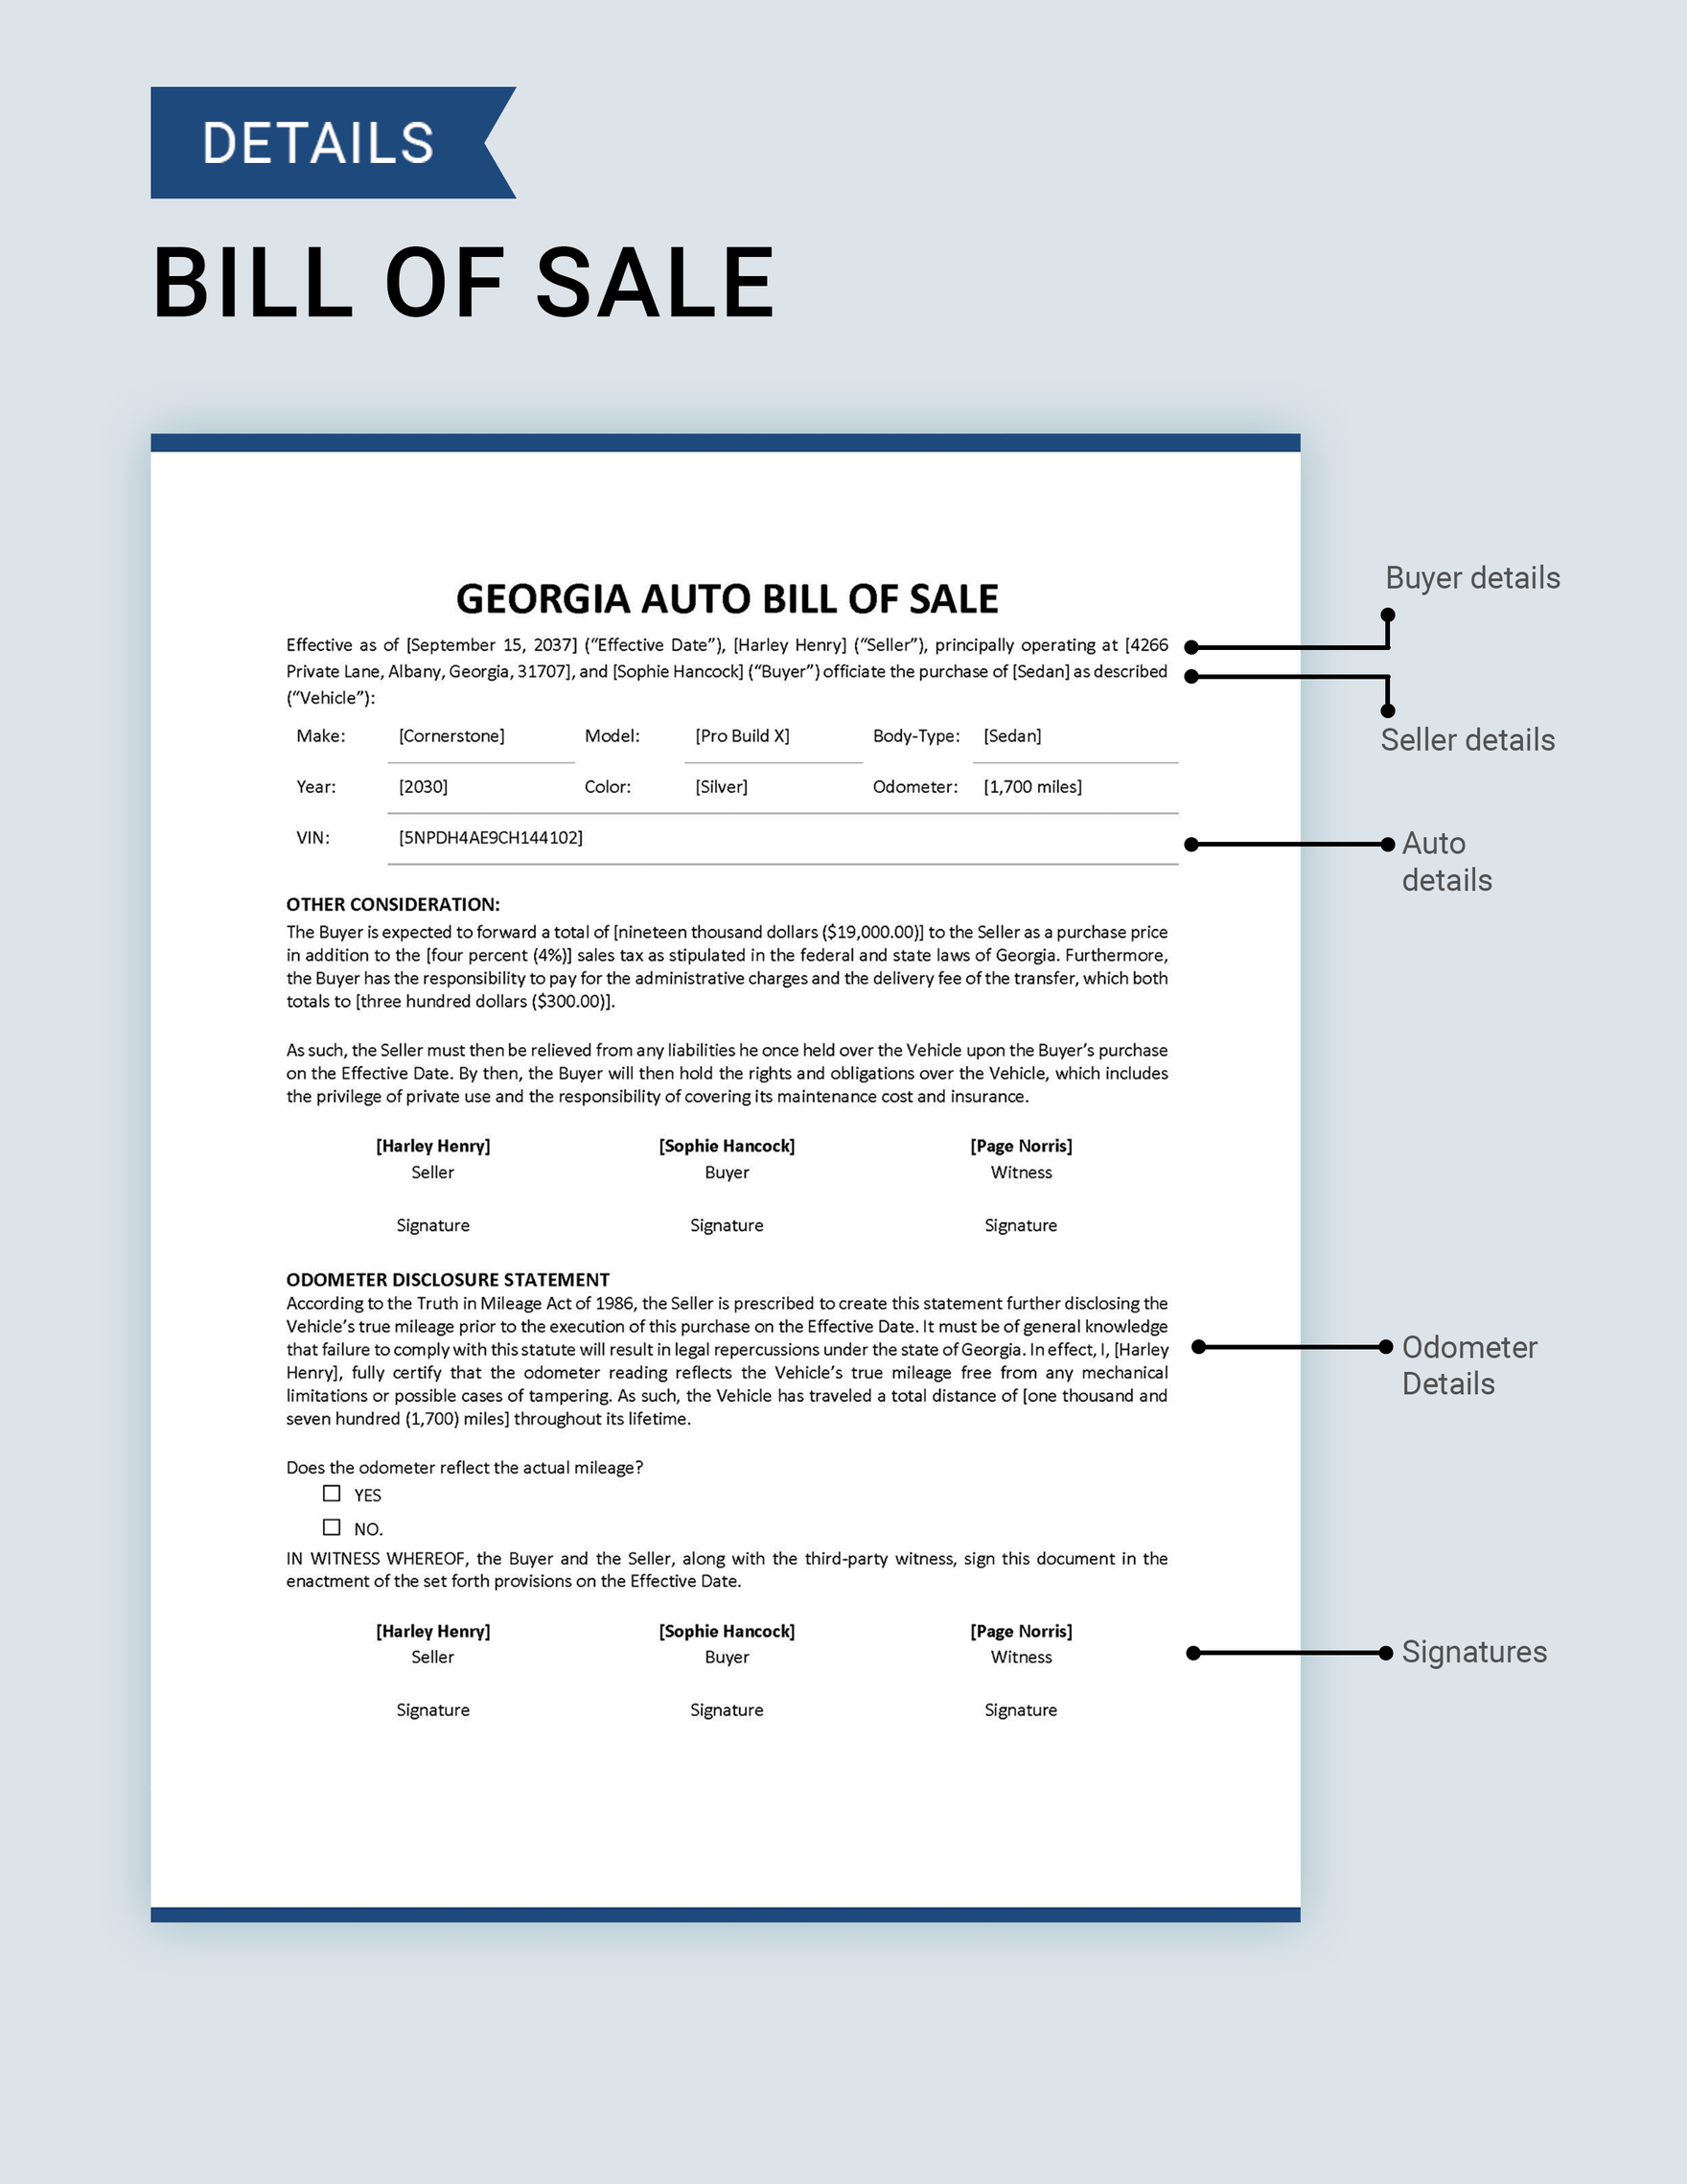 Georgia Auto Bill of Sale Template